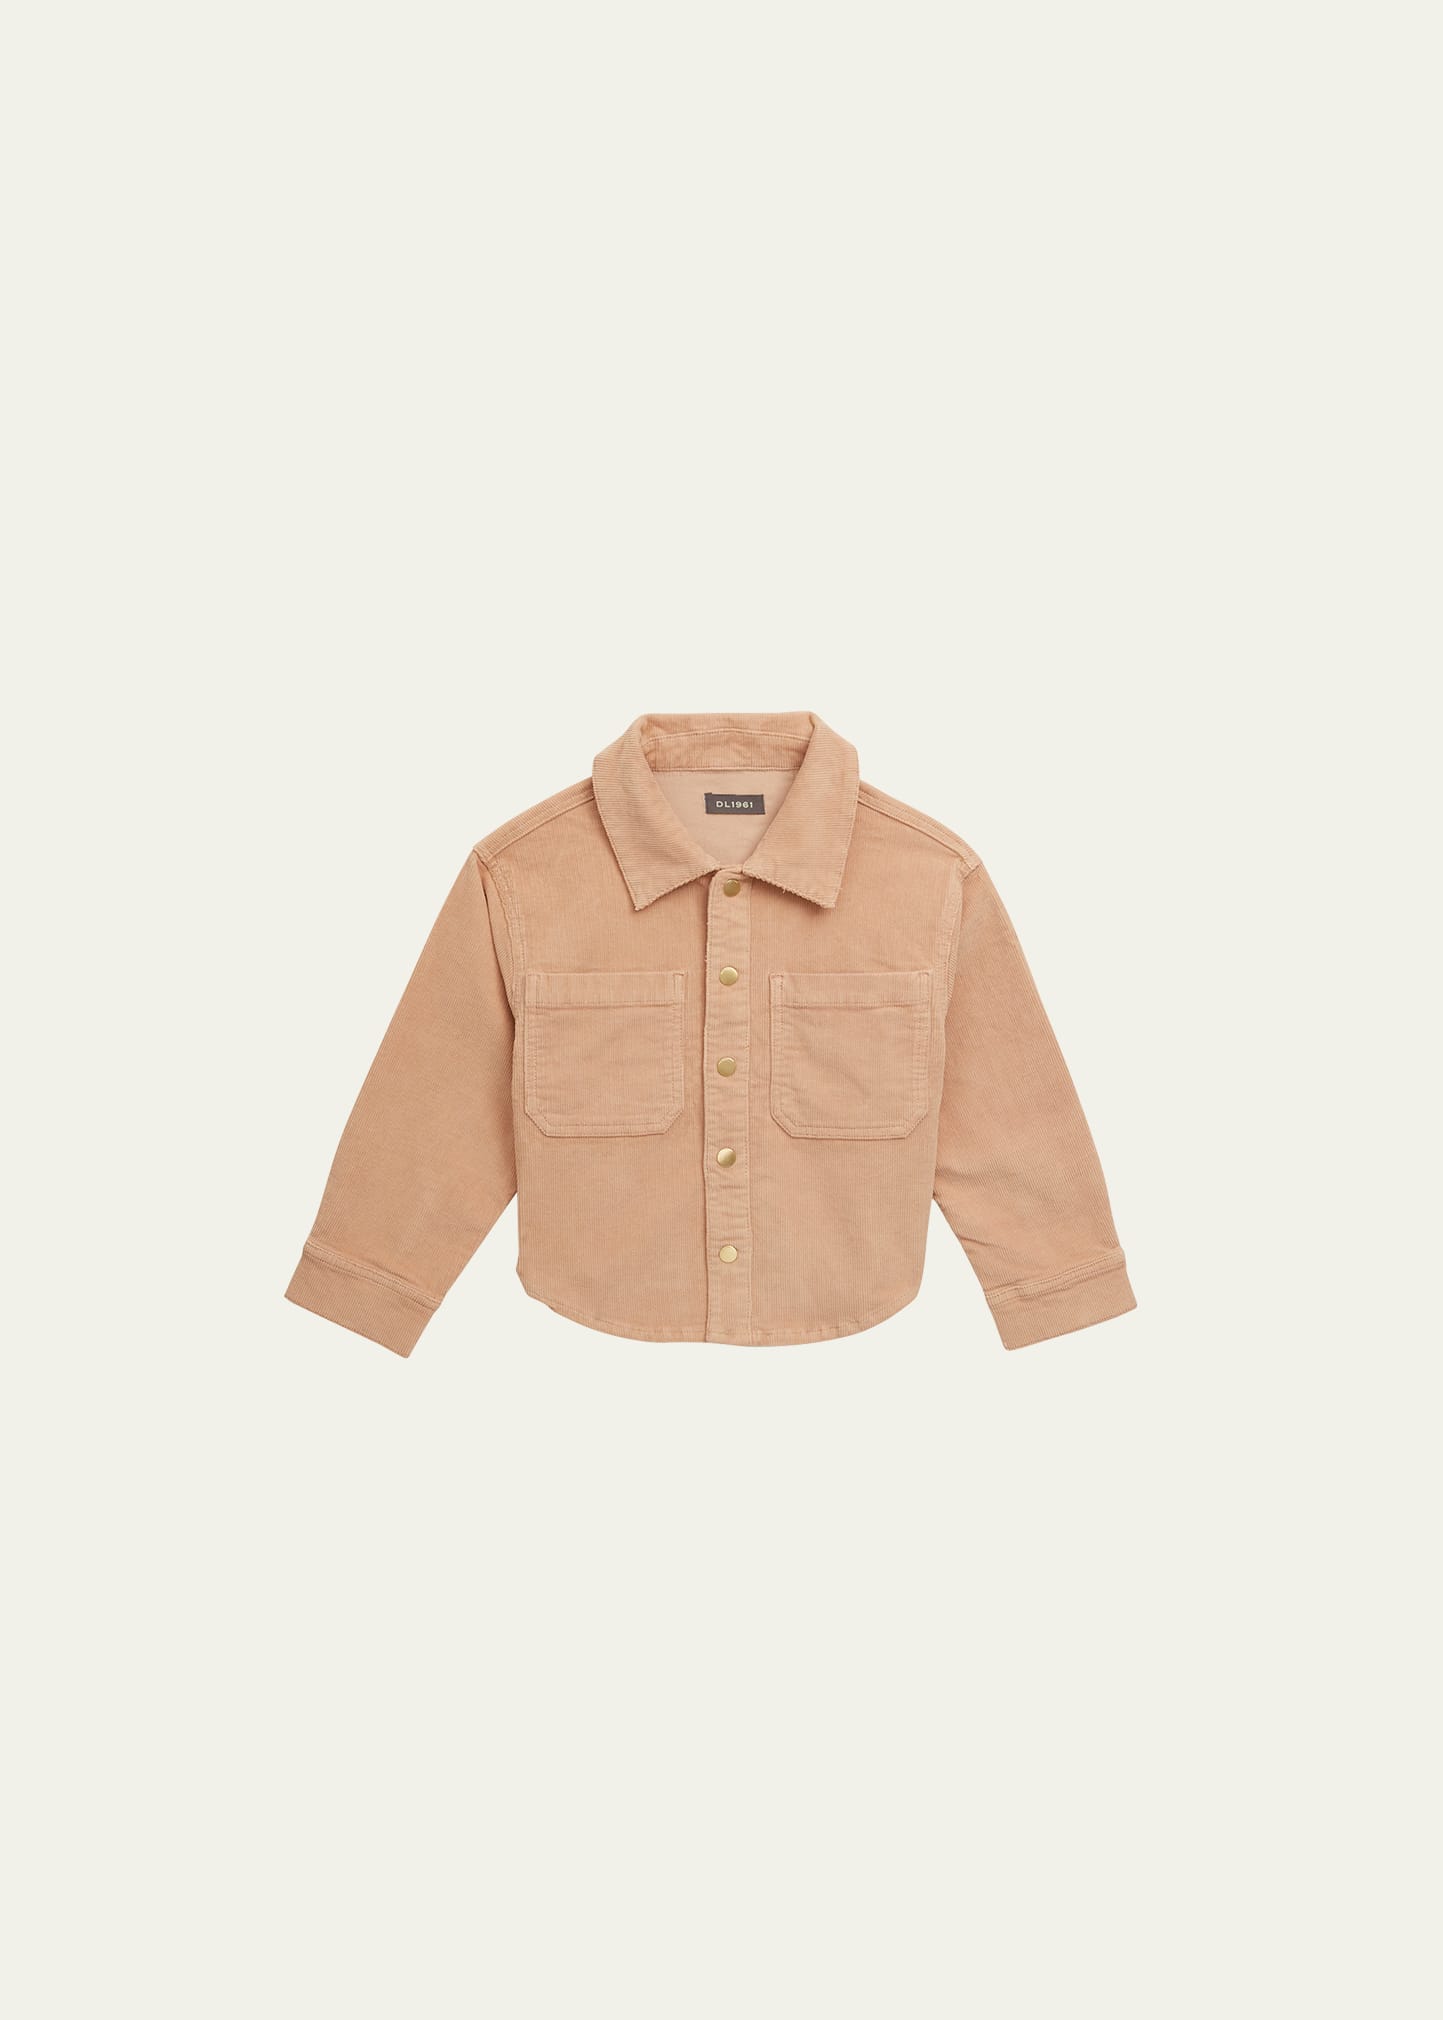 DL Premium Denim Girl's Olivia Corduroy Shirt, Size S-L